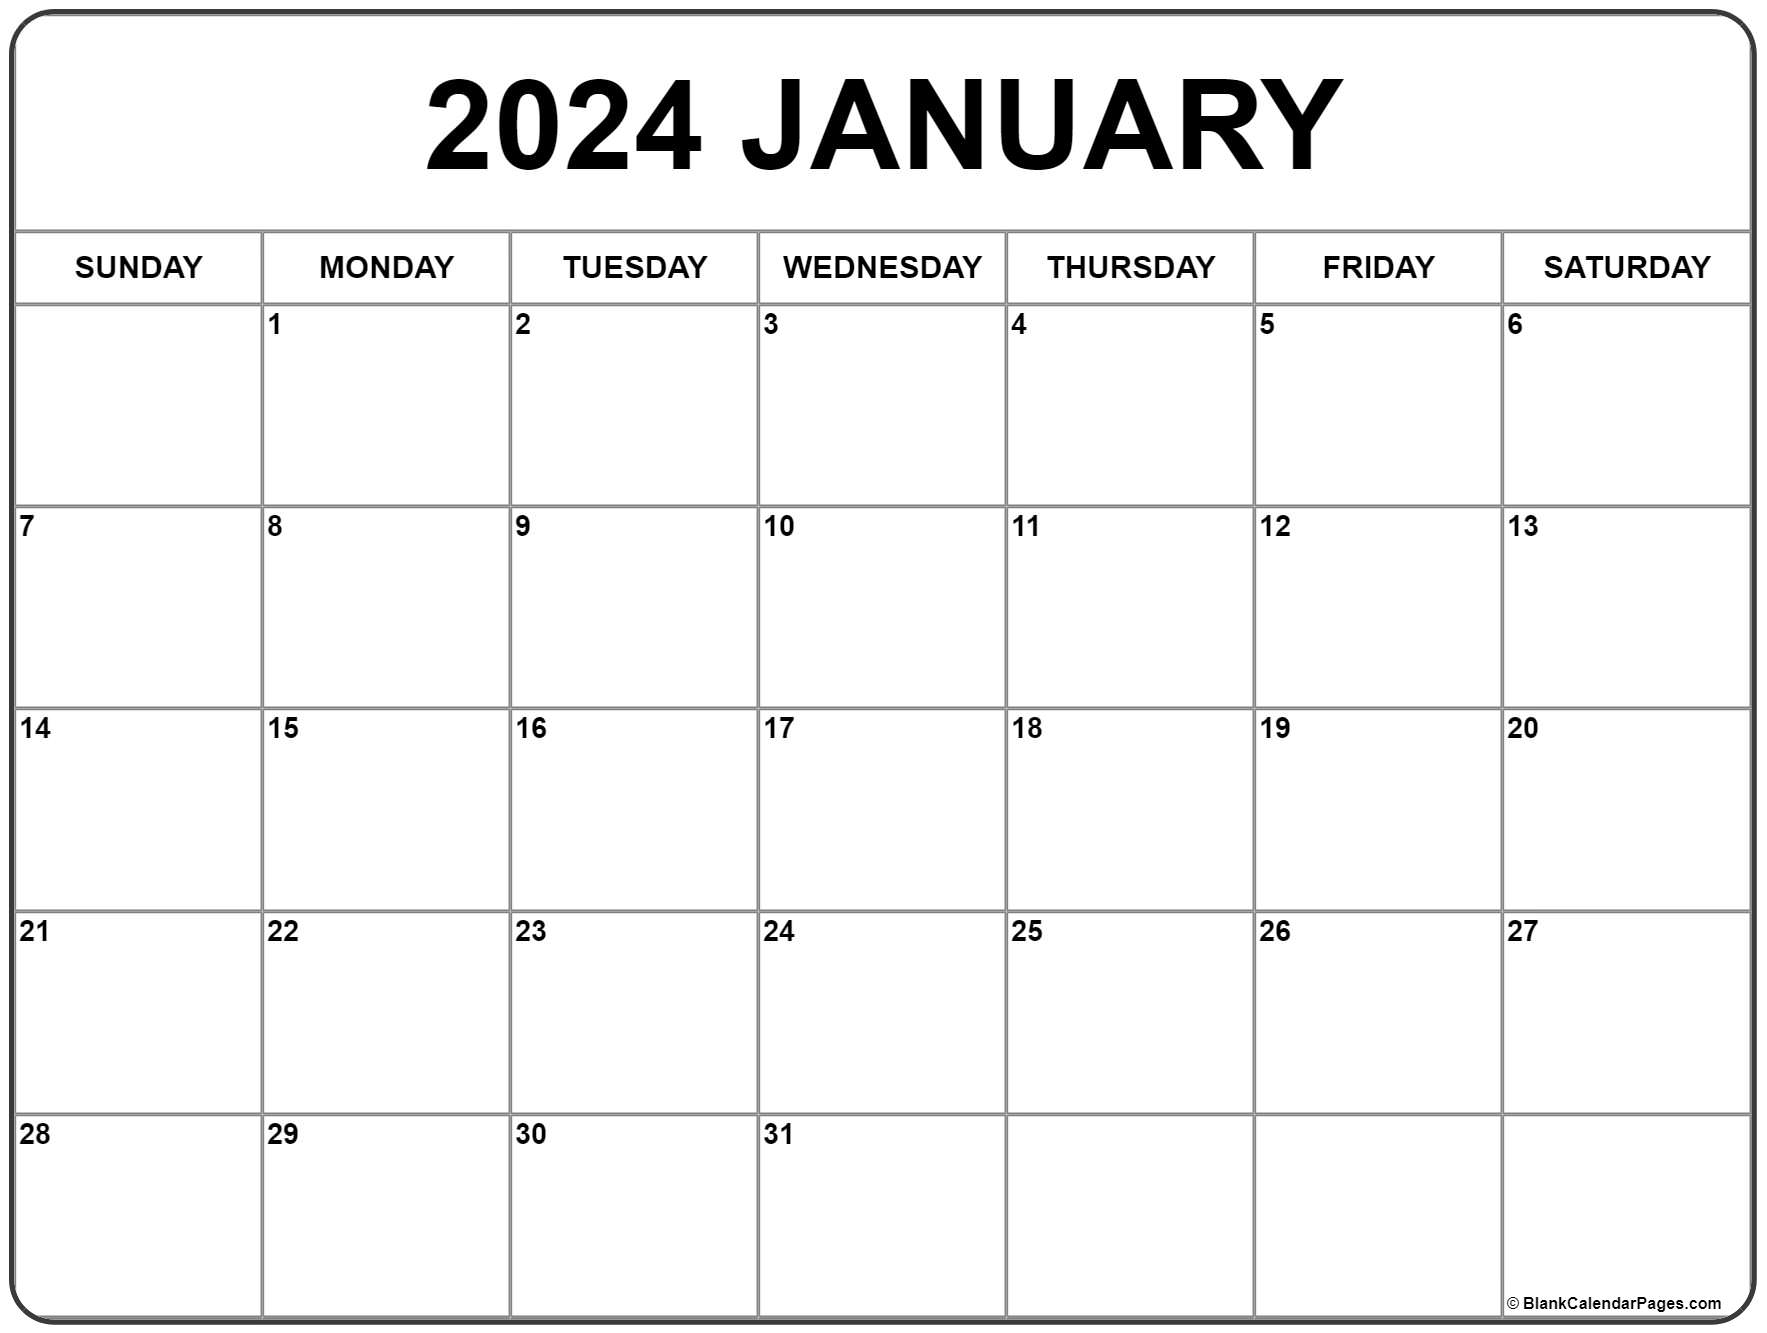 Free Printable Calendar 2022 January.January 2022 Calendar Free Printable Calendar